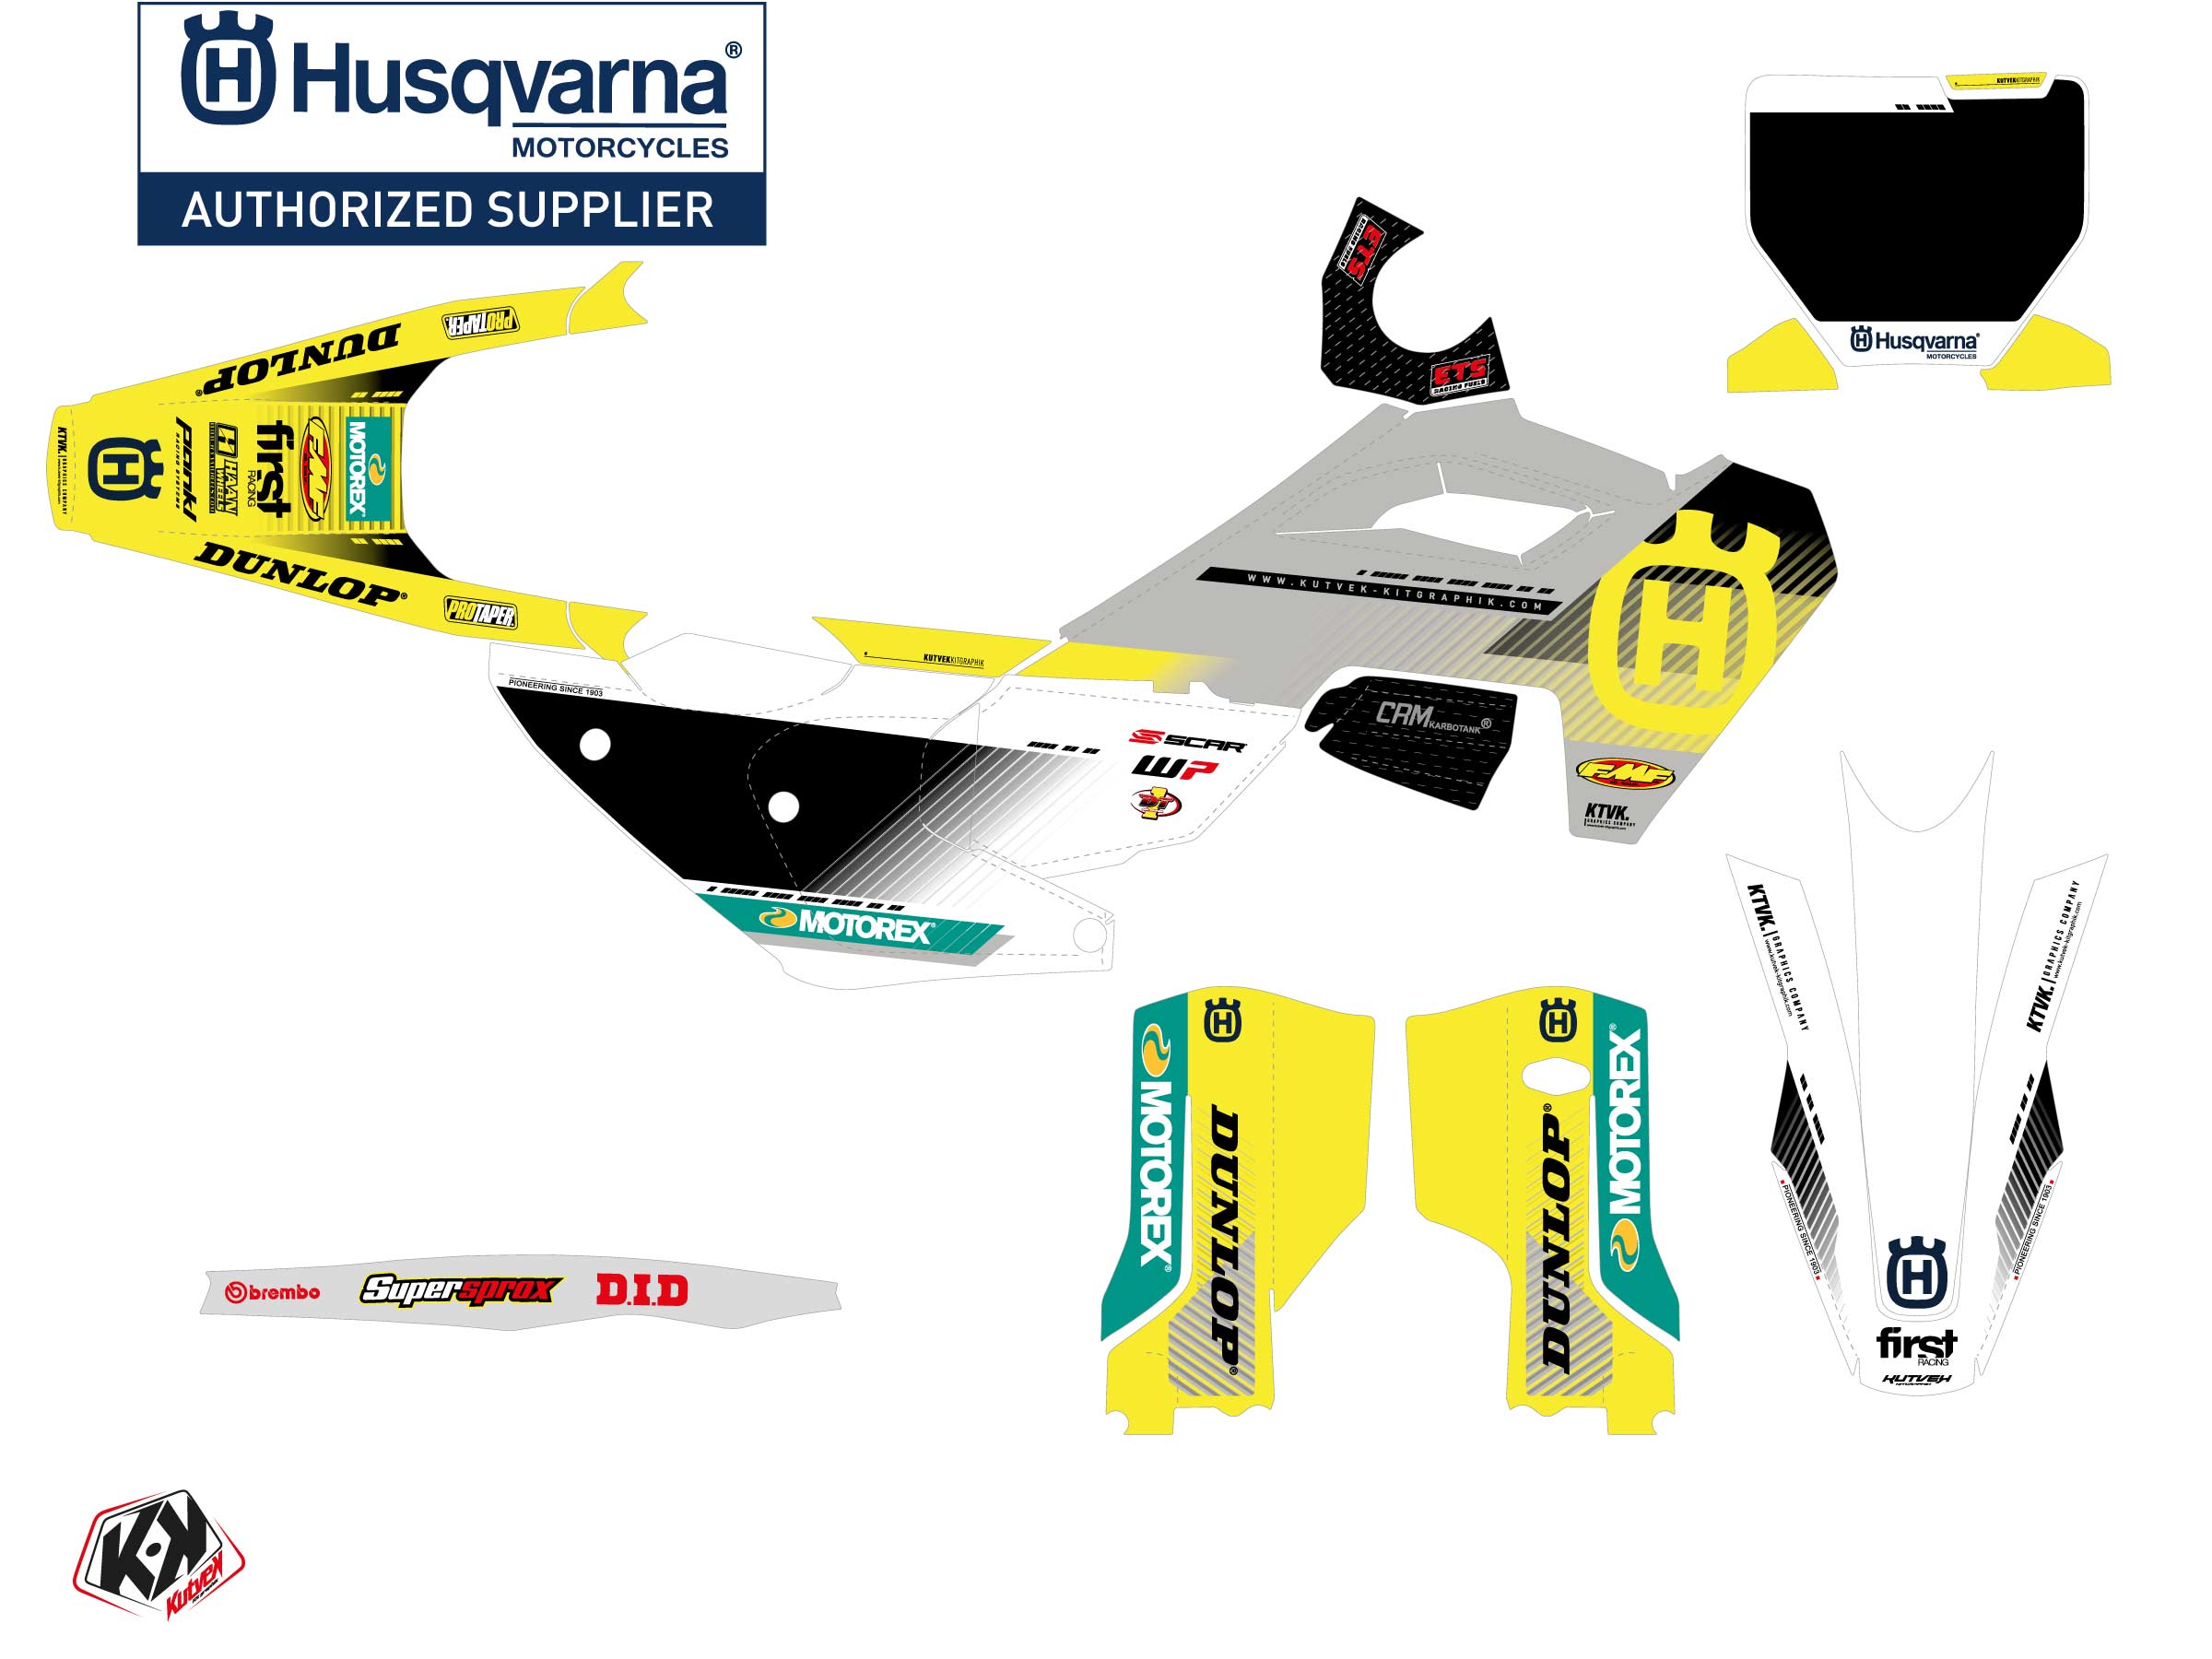 Husqvarna Fc 250 Dirt Bike Origin K24 Graphic Kit Grey